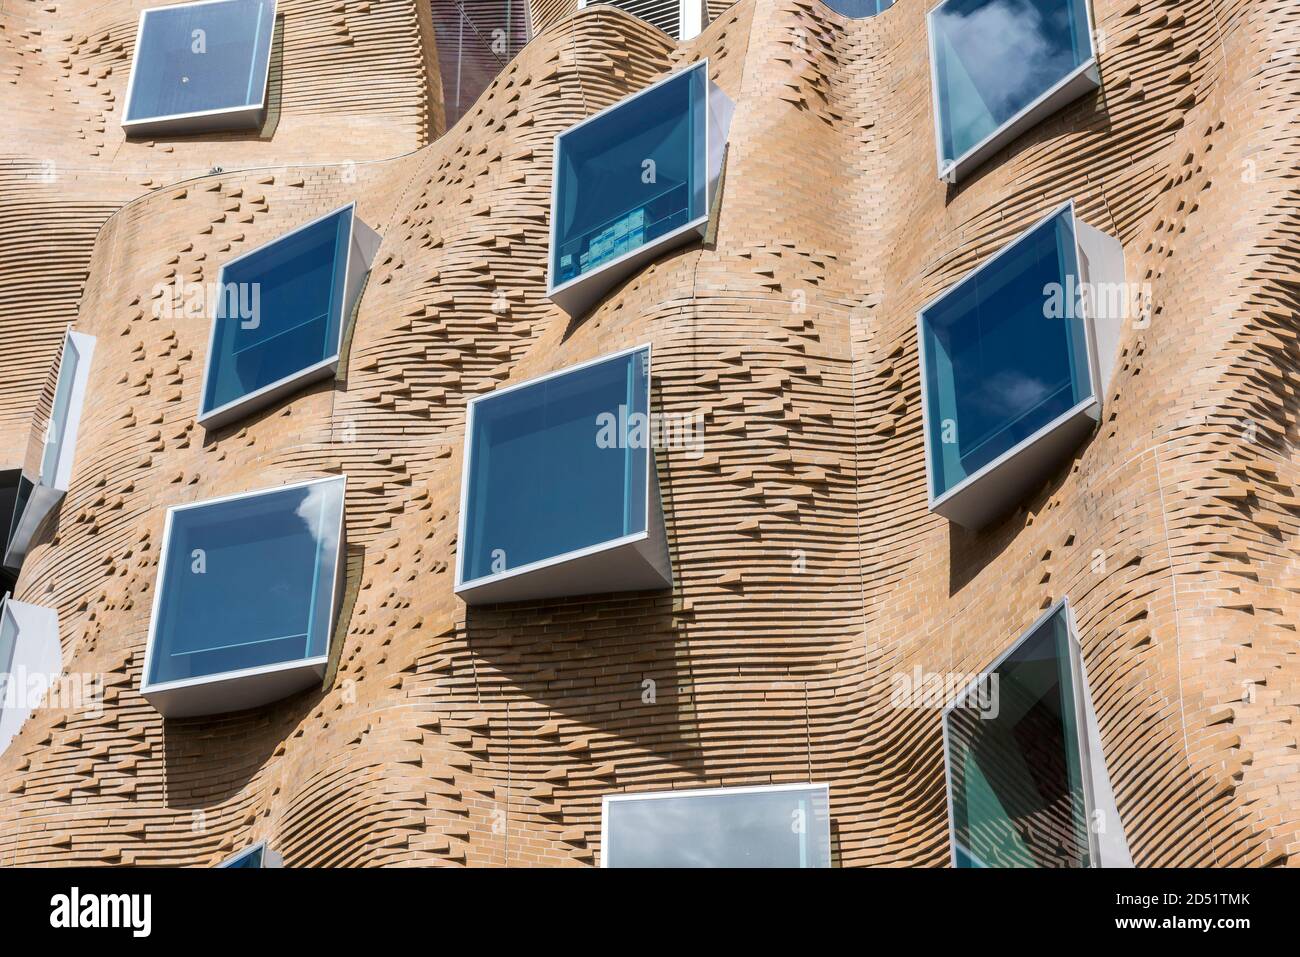 Vista detallada de la pared ondulada de ladrillo. Edificio del ala Dr. Chau Chak, UTS Business School, Sydney, Australia. Arquitecto: Gehry Partners, LLP, 2015. Foto de stock